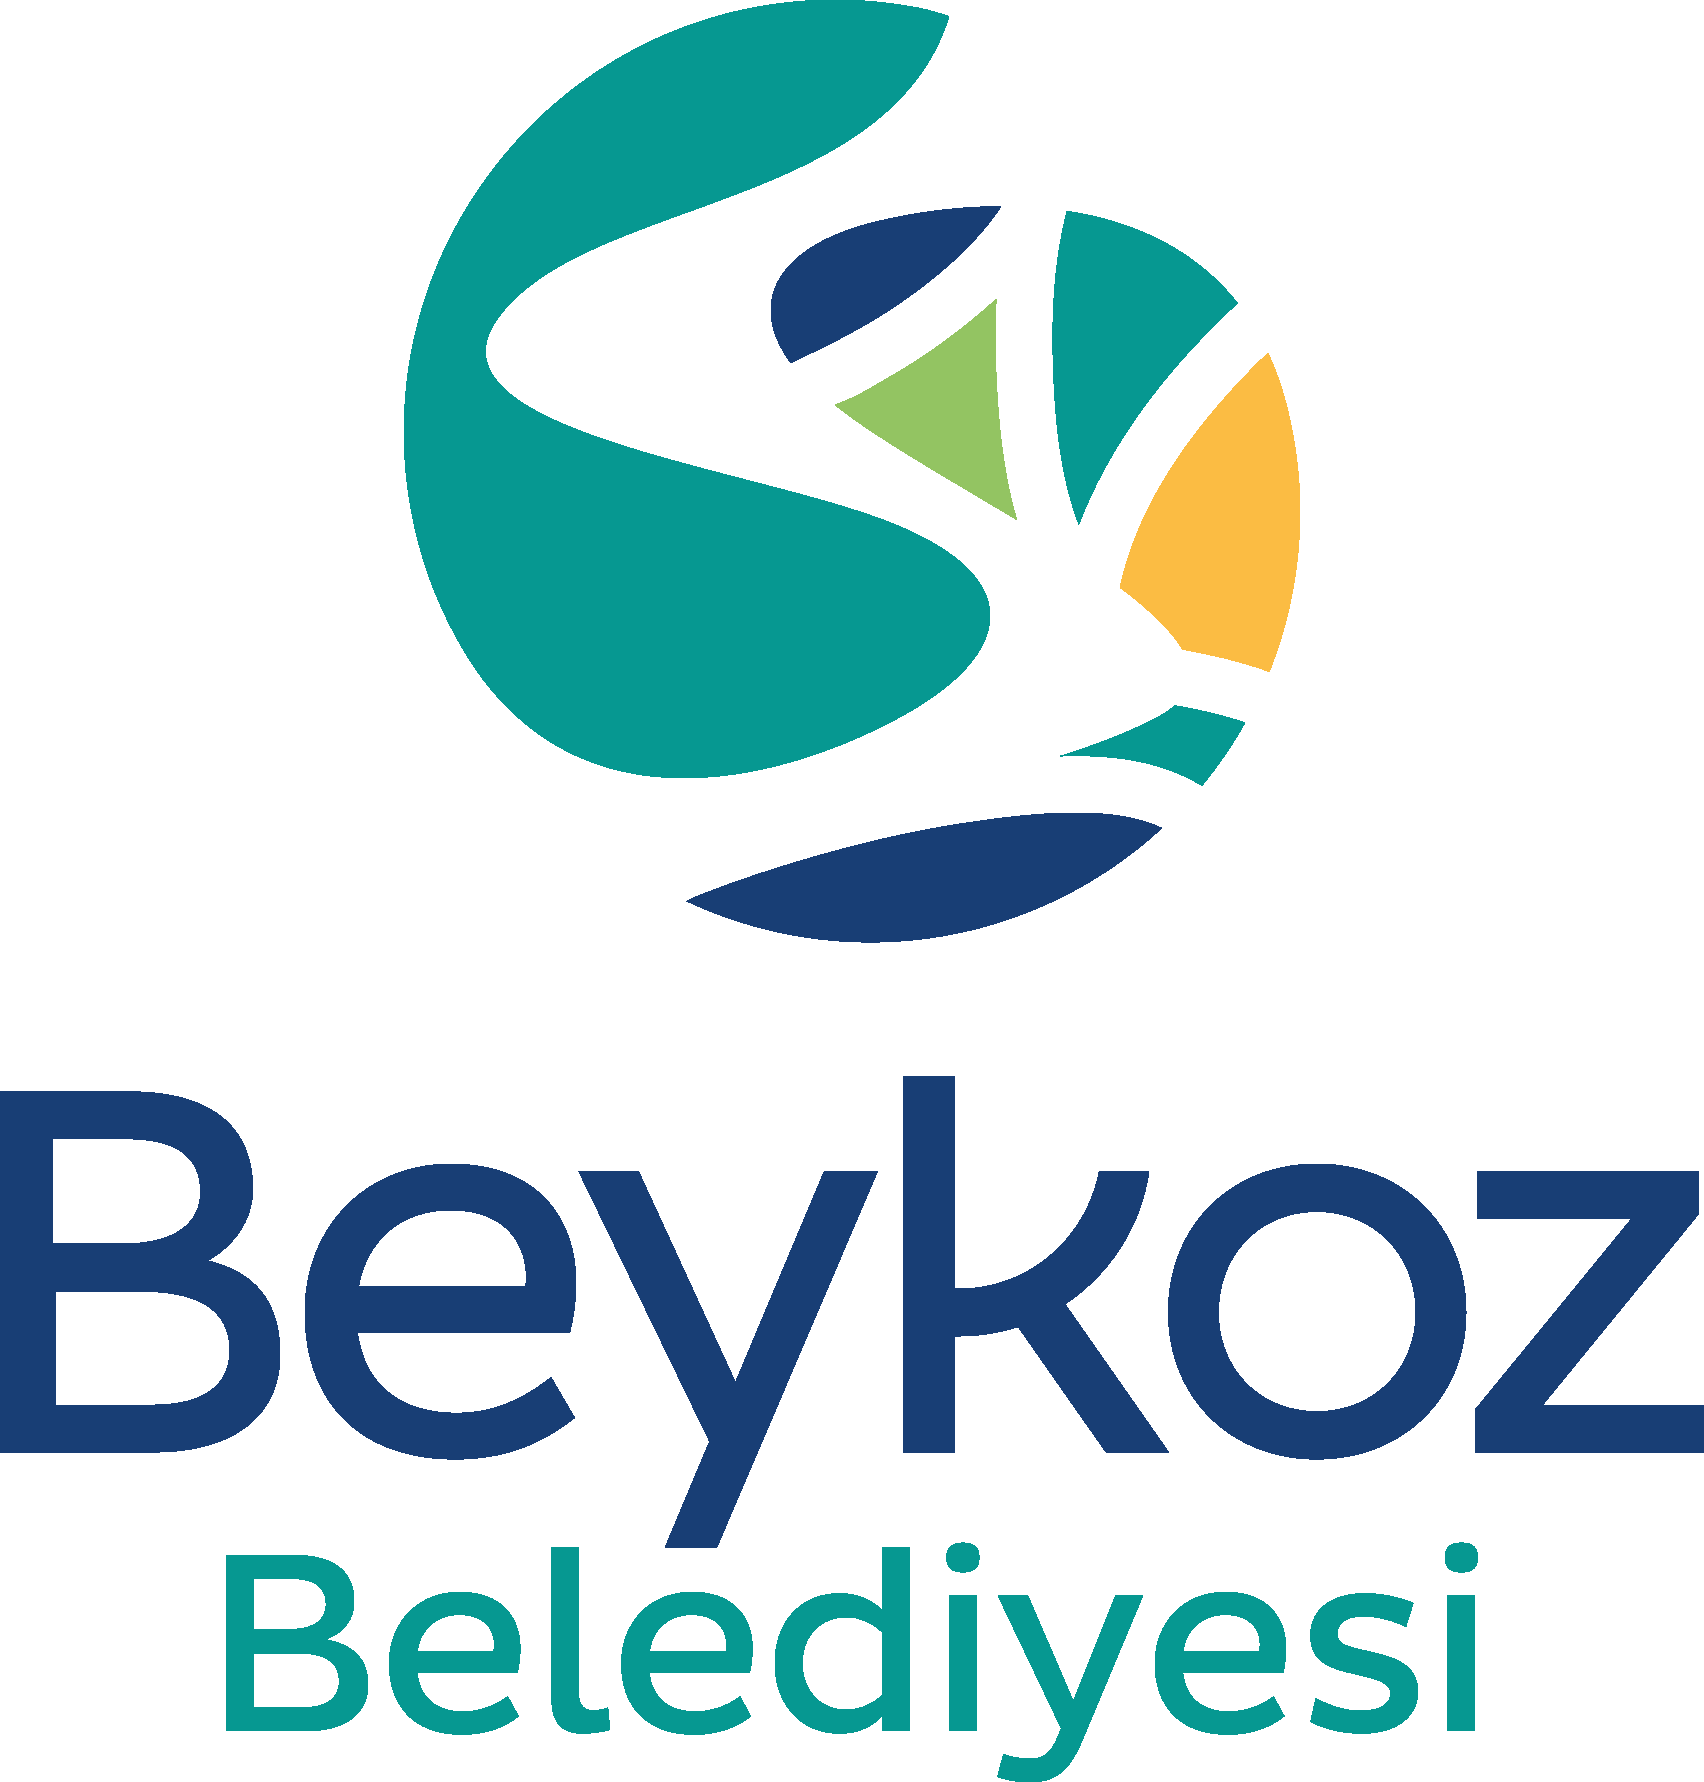 Beykoz Belediyesi Logo png